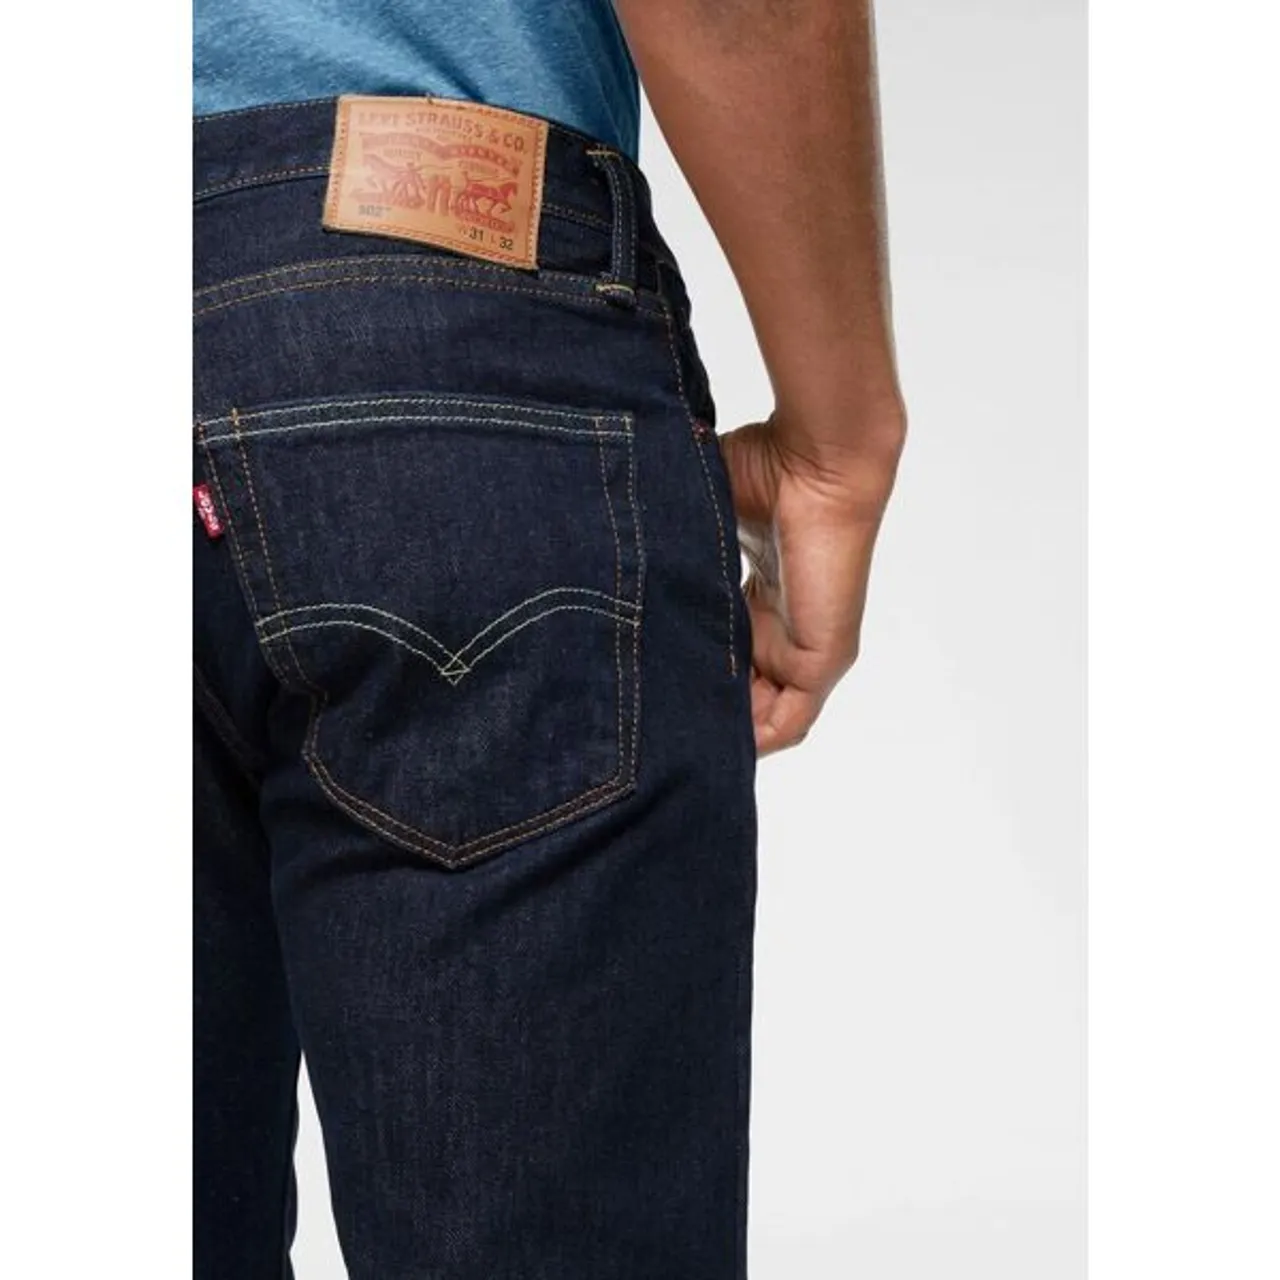 Tapered-fit-Jeans LEVI'S "502 TAPER" Gr. 34, Länge 36, blau (onewash) Herren Jeans Tapered-Jeans Bestseller